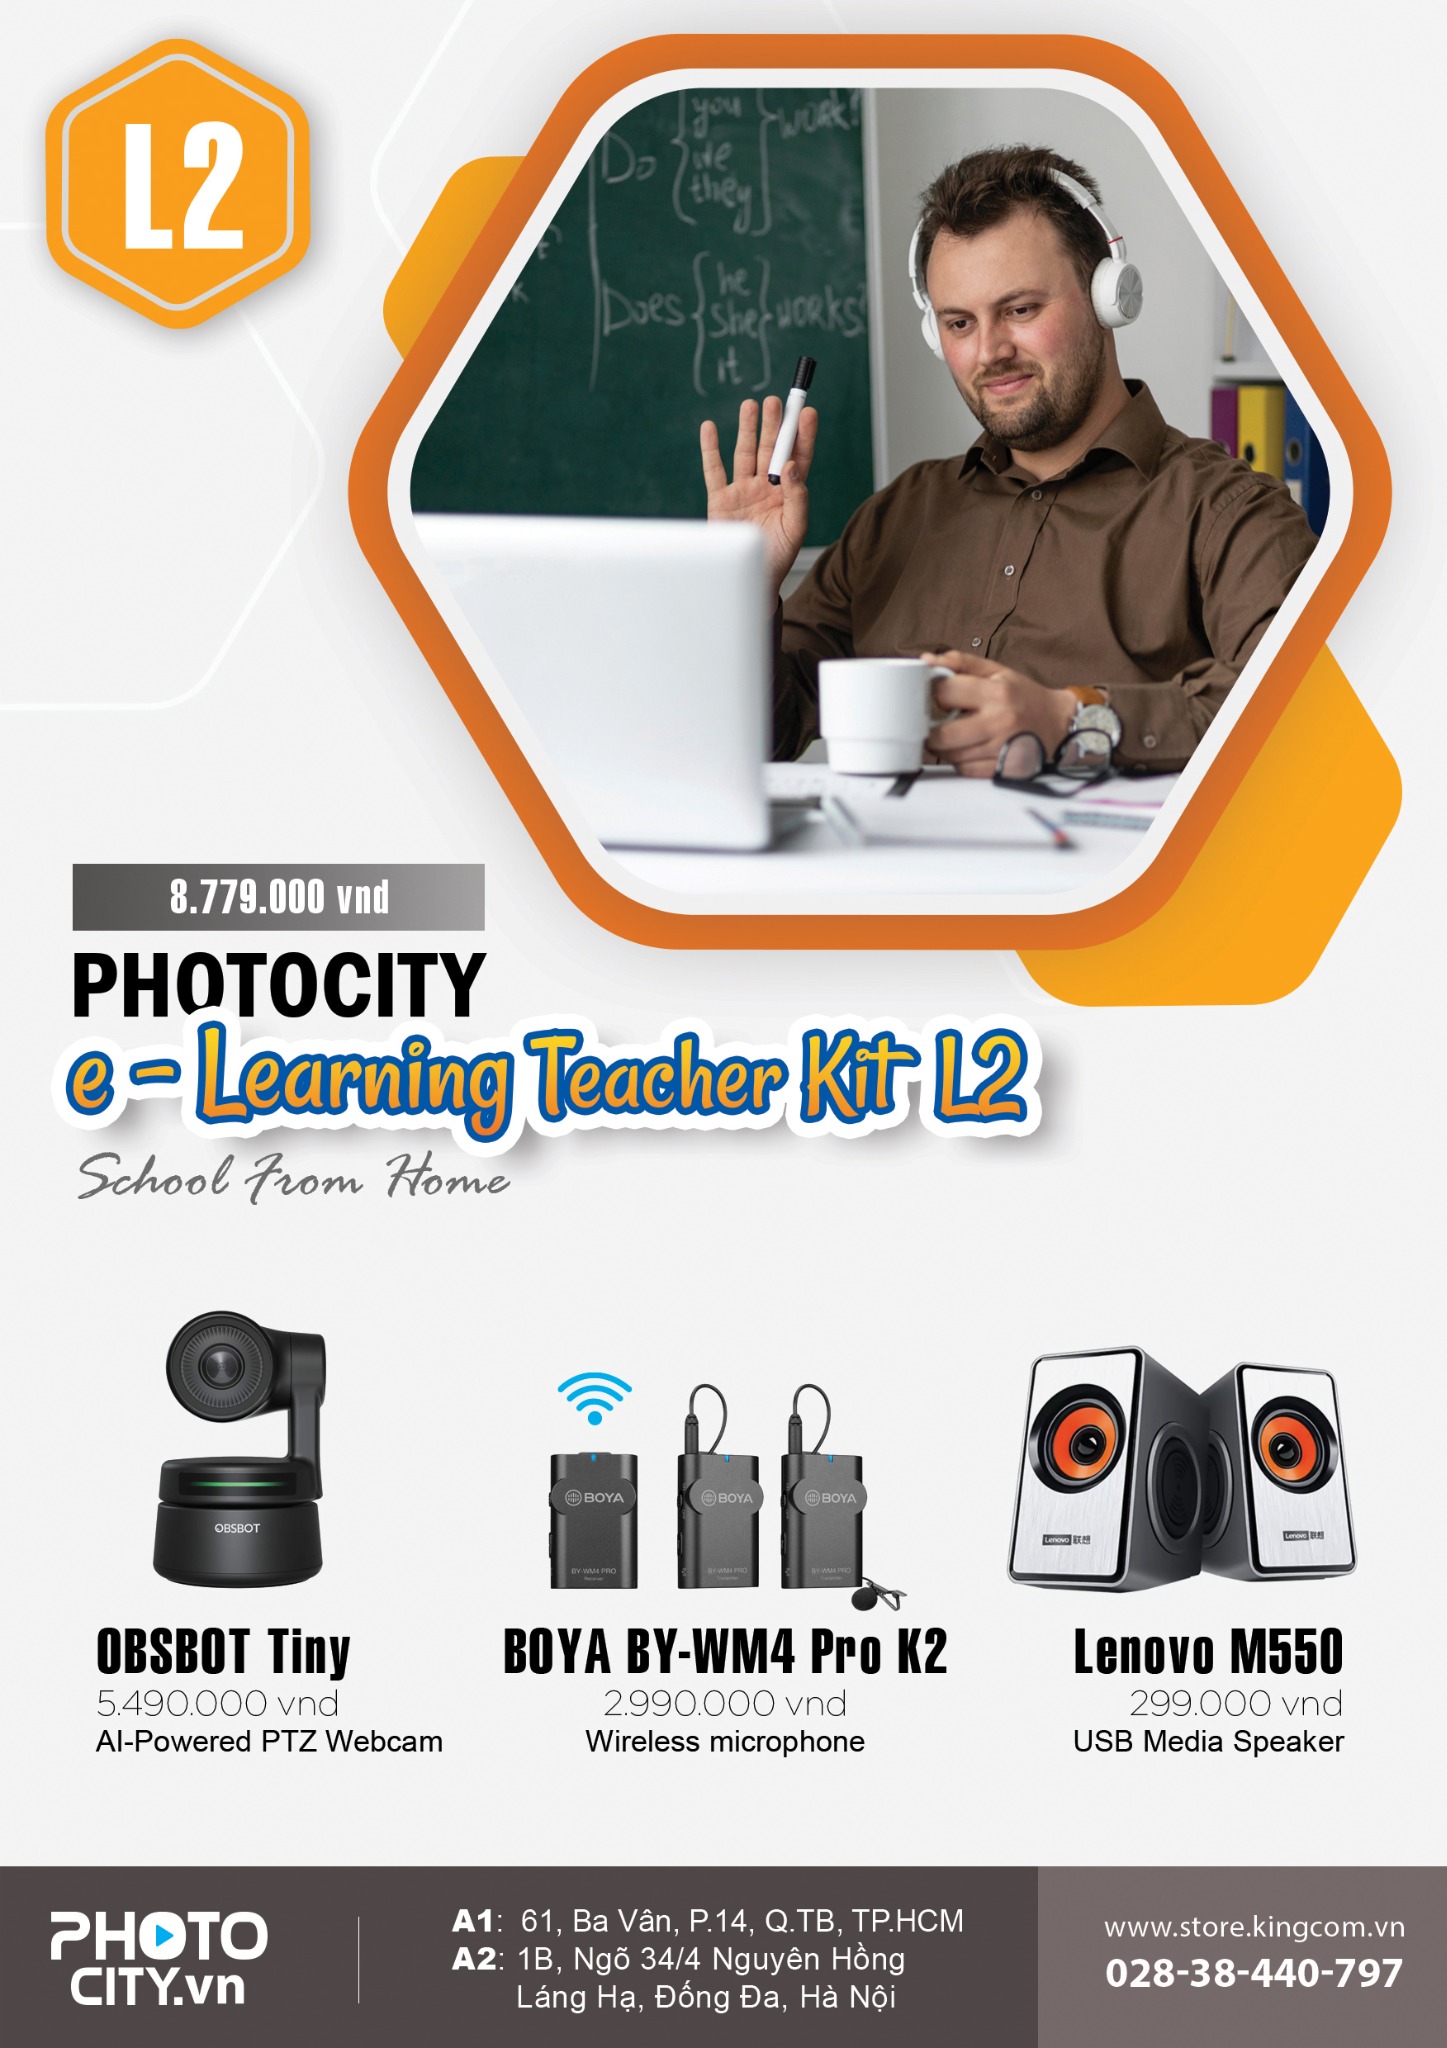 PhotoCity e -learning Teacher Kit L2 (Bộ dụng cụ dạy học online)